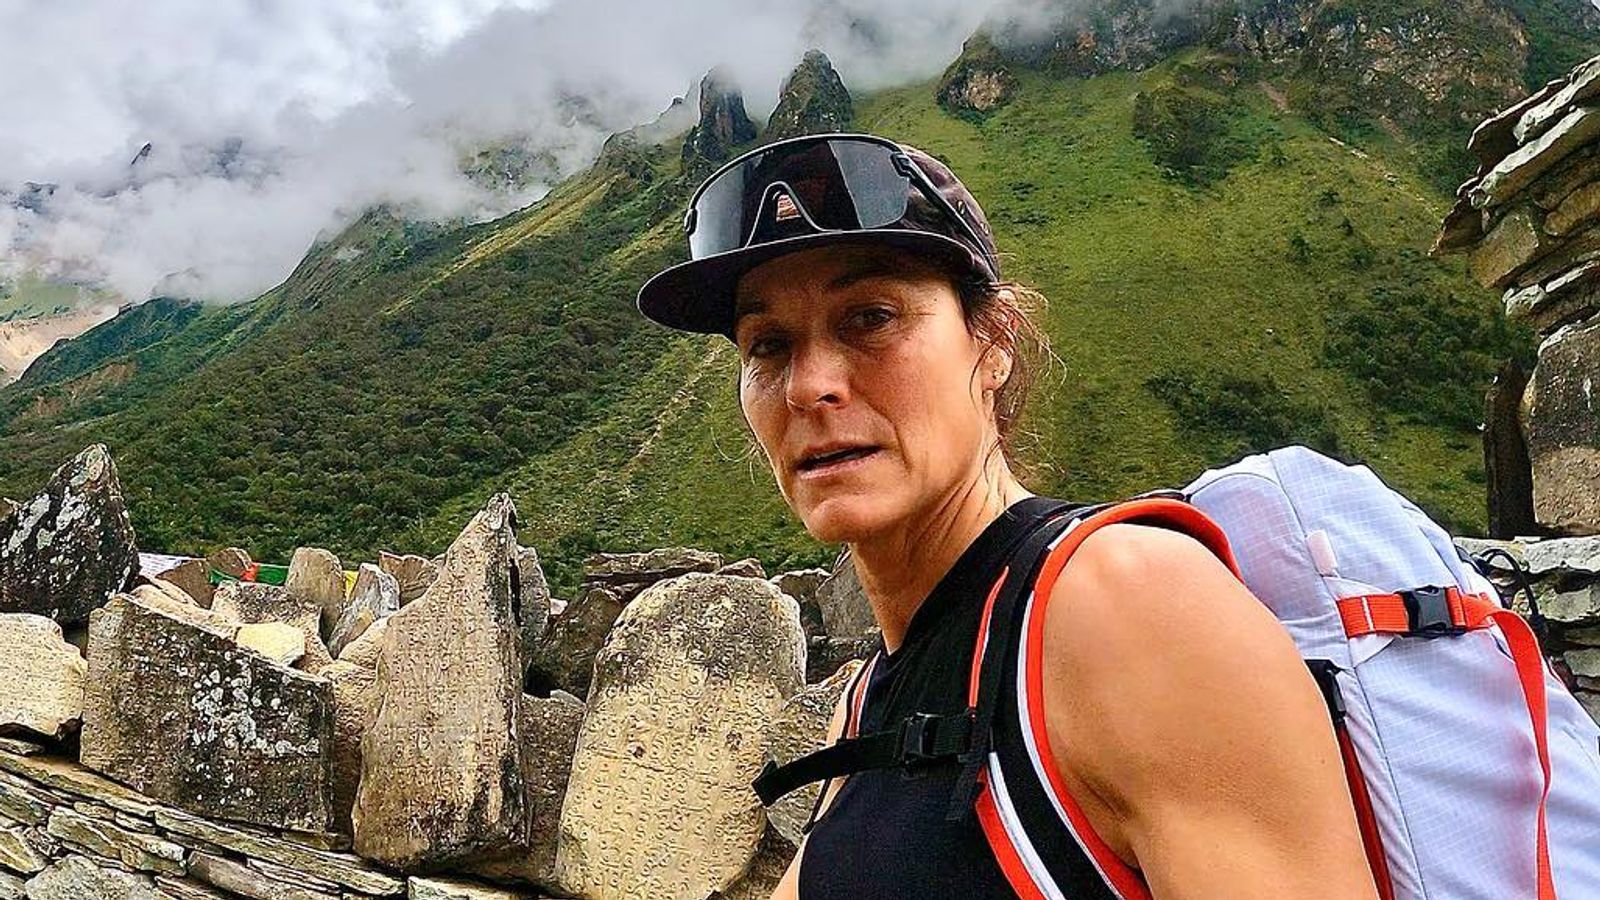 US mountaineer Hilaree Nelson missing on Mount Manaslu in Nepal